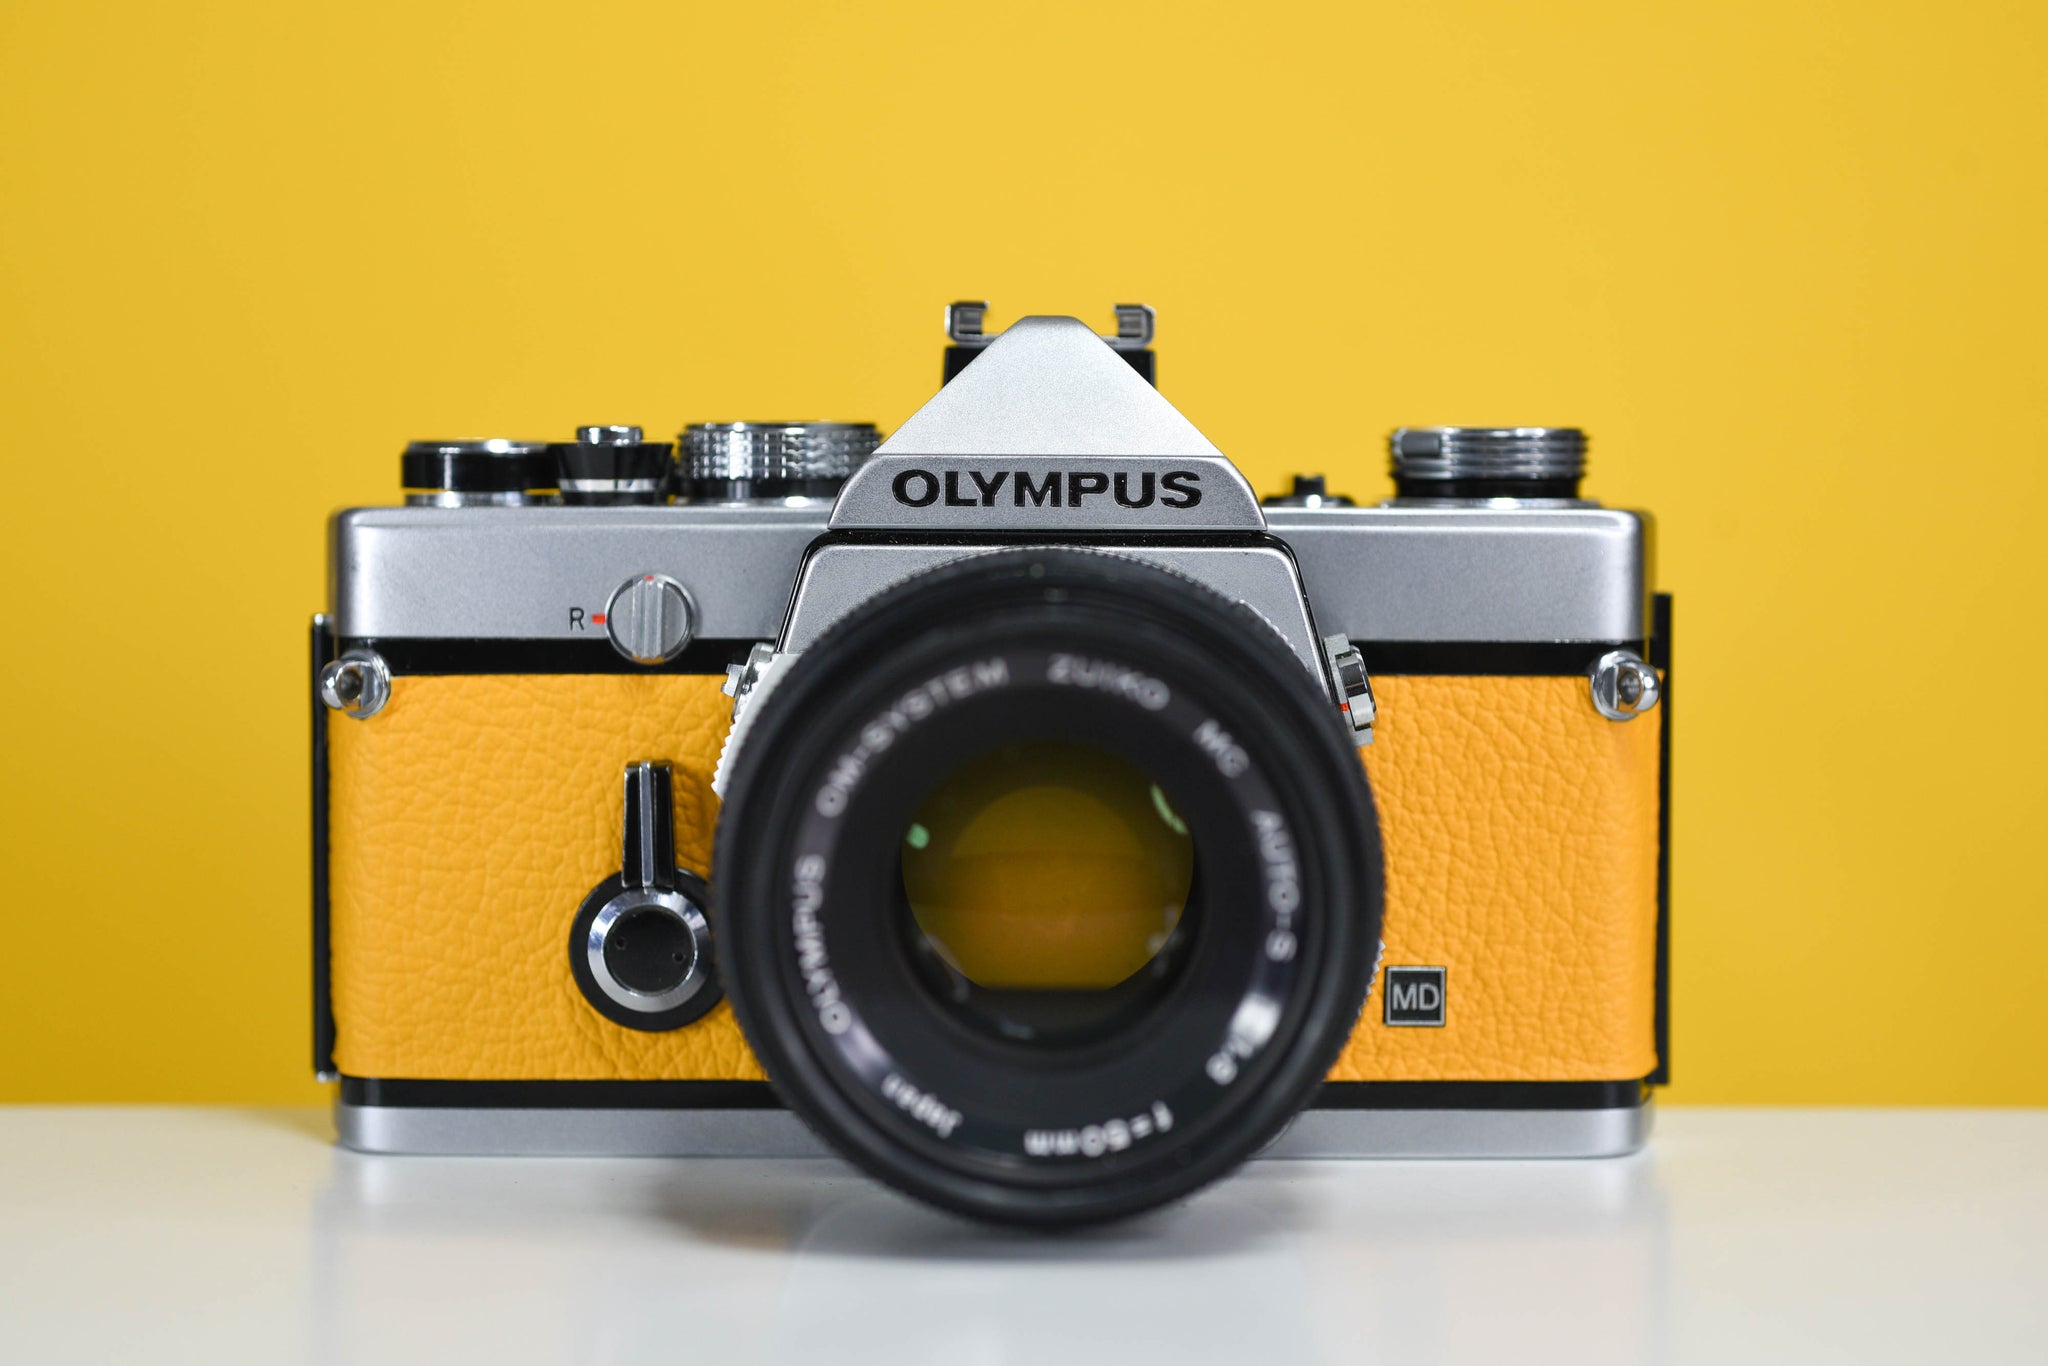 Olympus OM-1 MD 35mm Film Camera with Zuiko 50mm f/1.8 Prime Lens